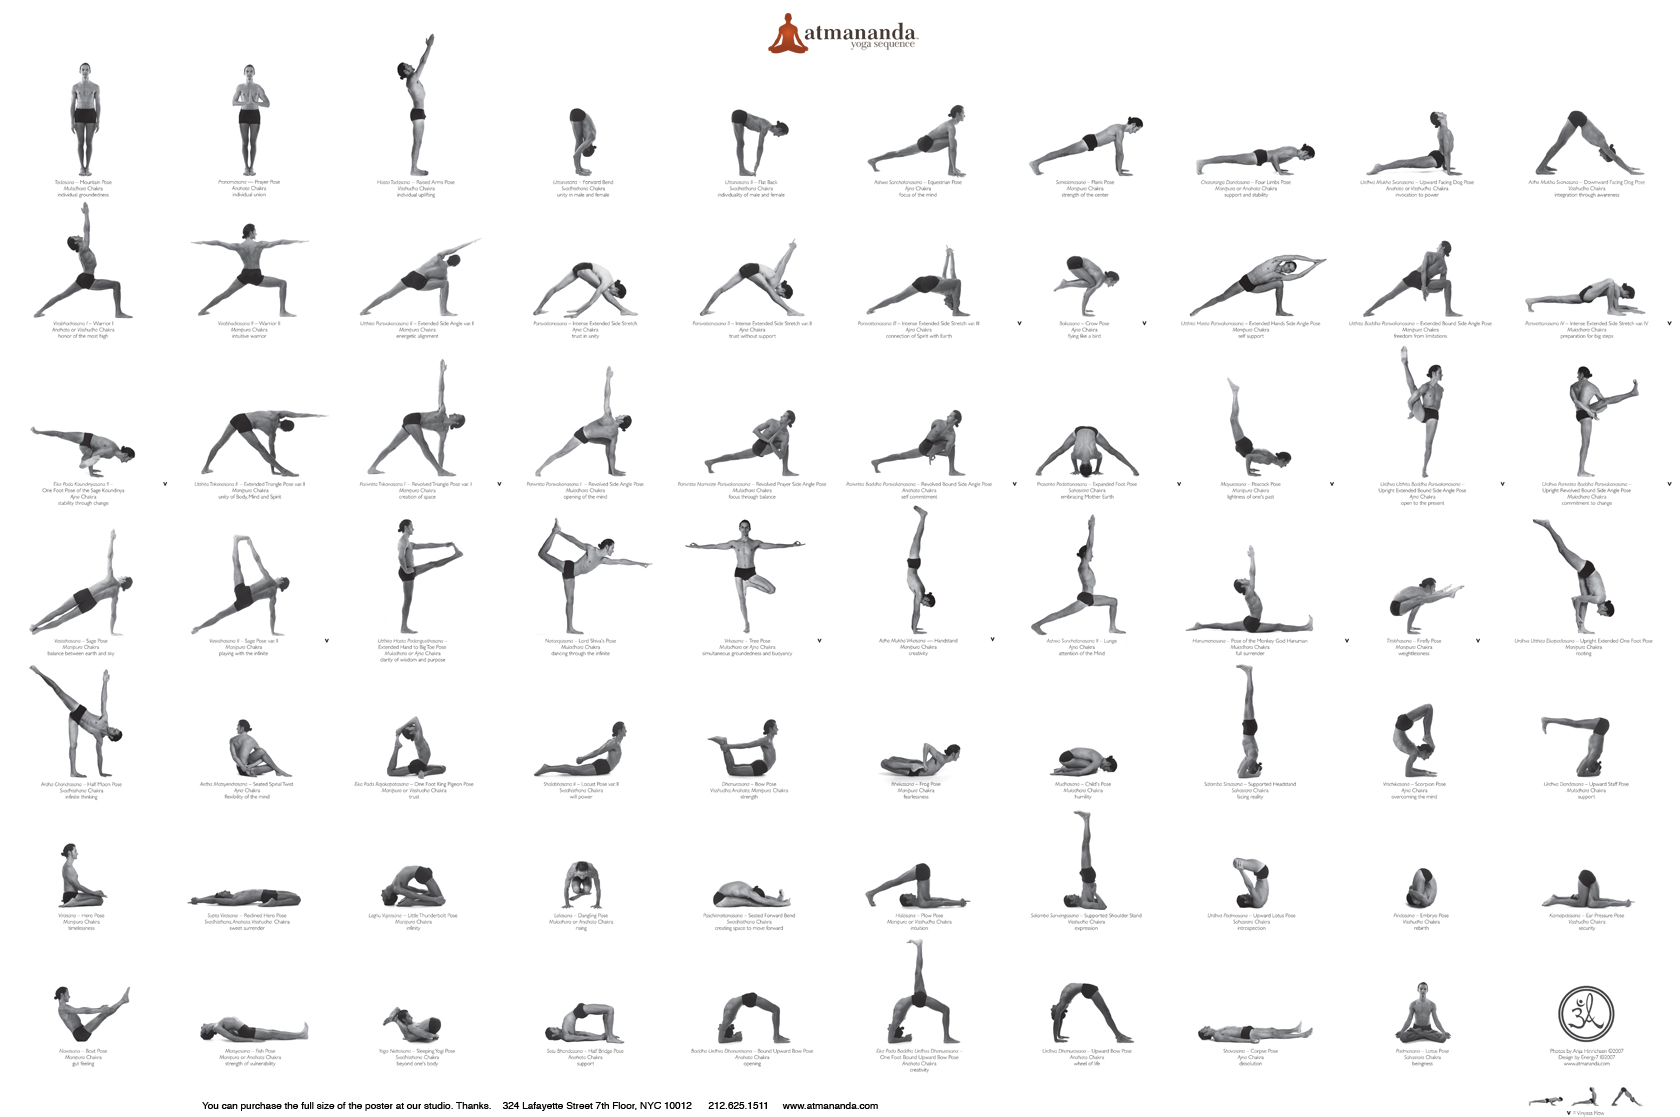 Yoga Chart For Beginners